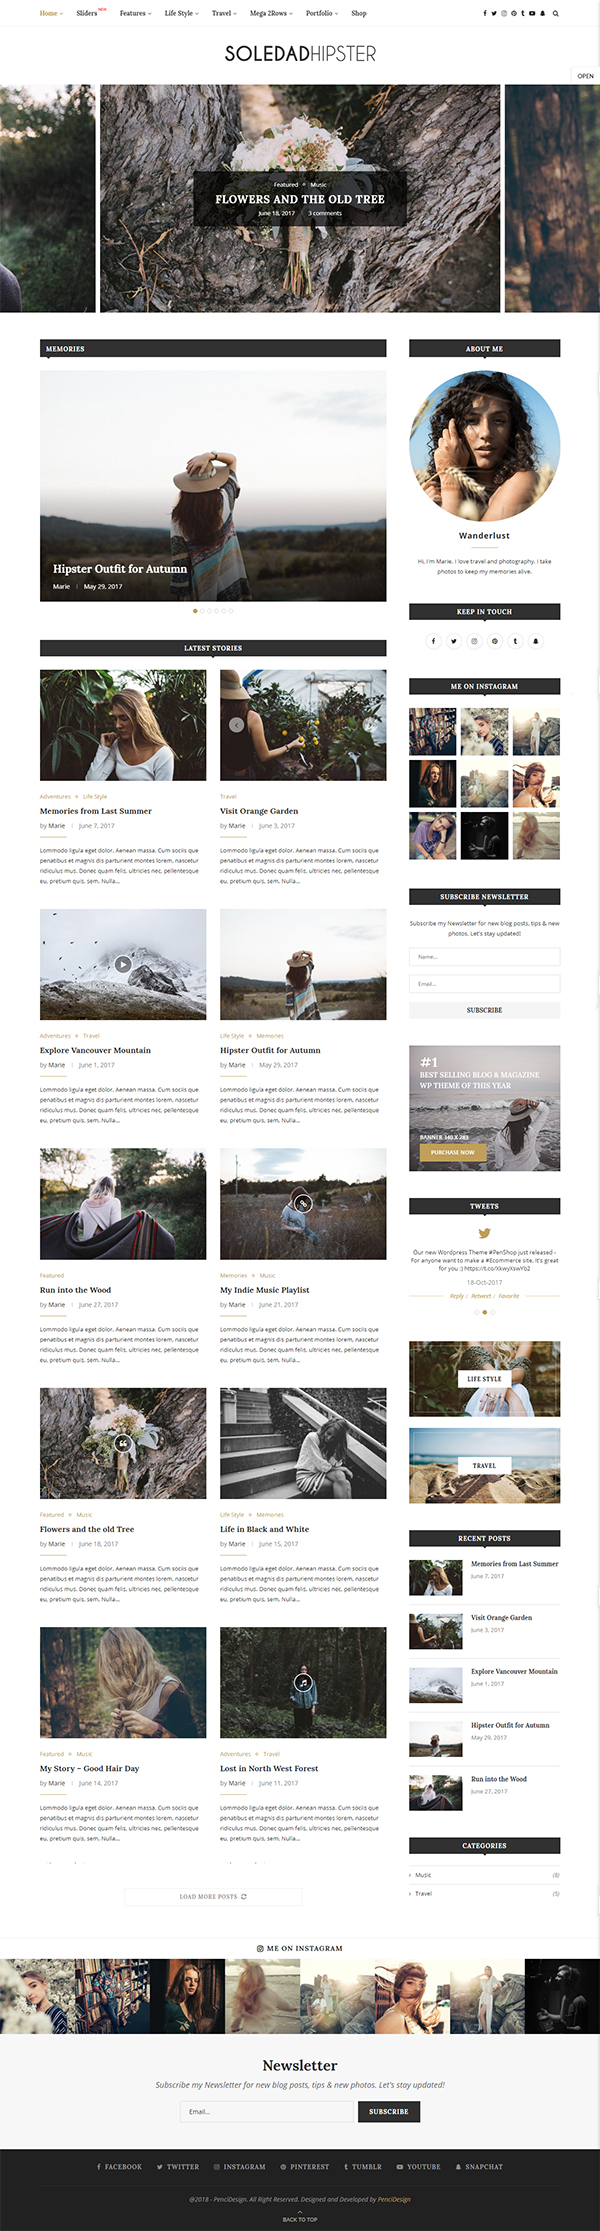 Soledad - Multi-Concept Blog/Magazine/News AMP WordPress Theme